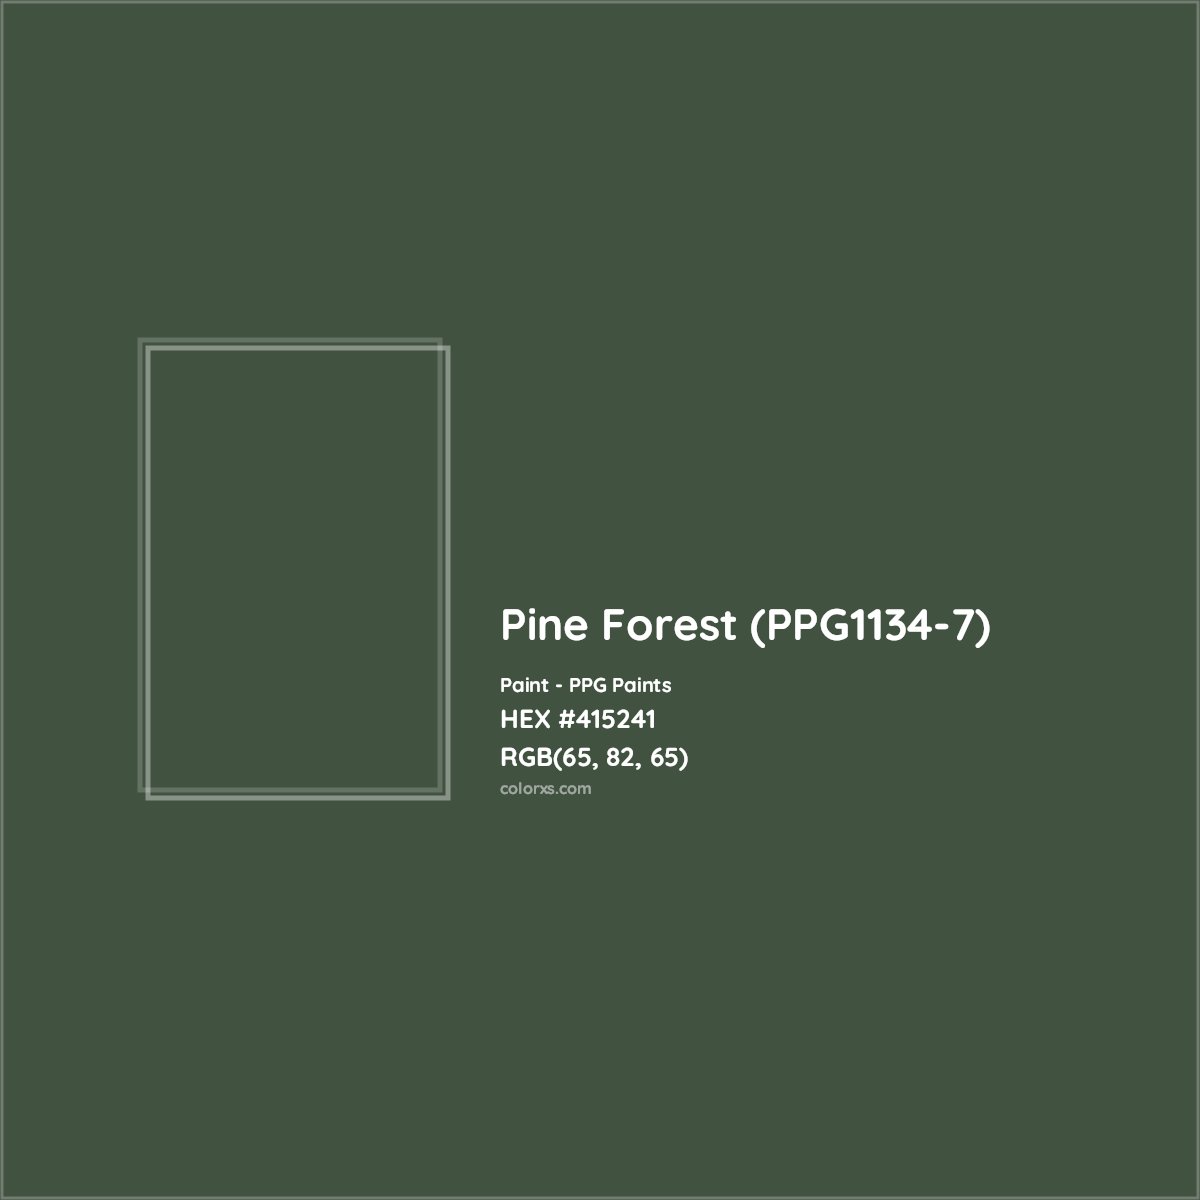 HEX #415241 Pine Forest (PPG1134-7) Paint PPG Paints - Color Code